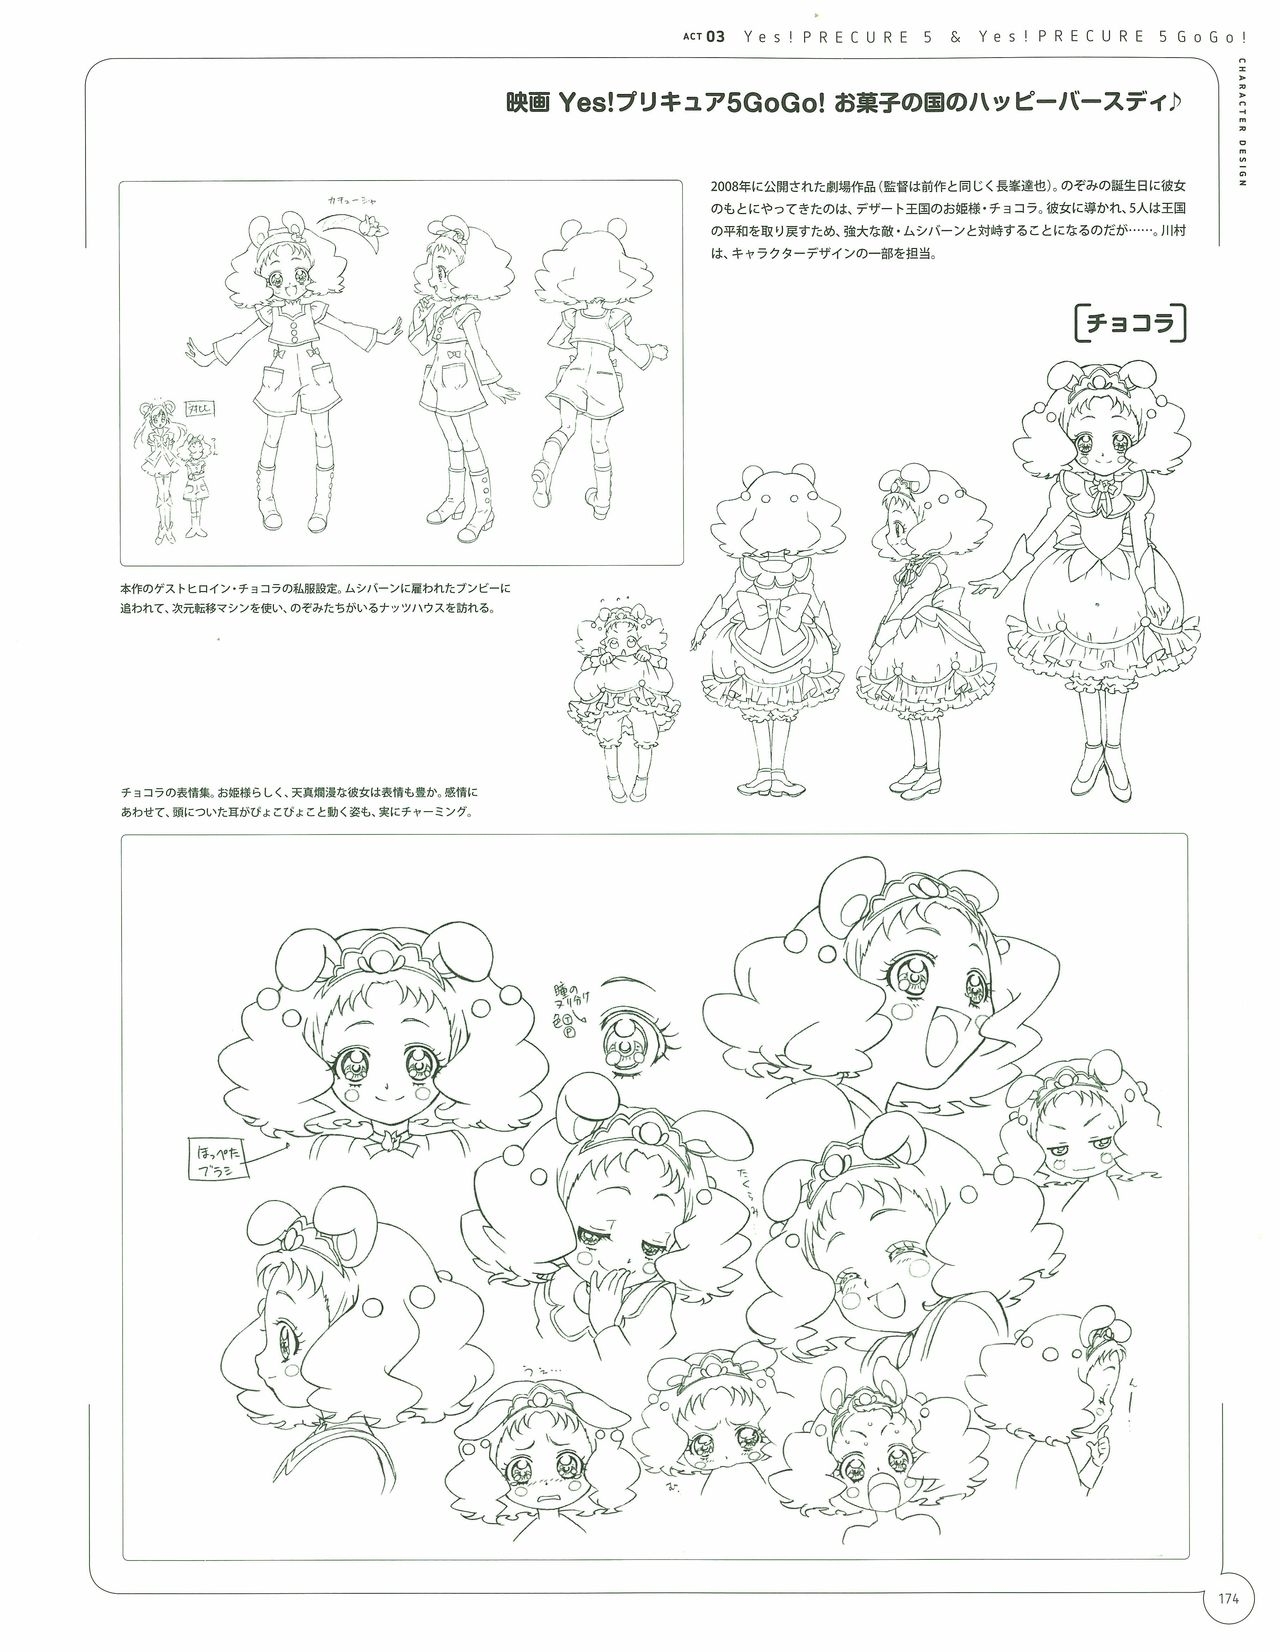 Kawamura Toshie - Toei Animation Precure Works 174